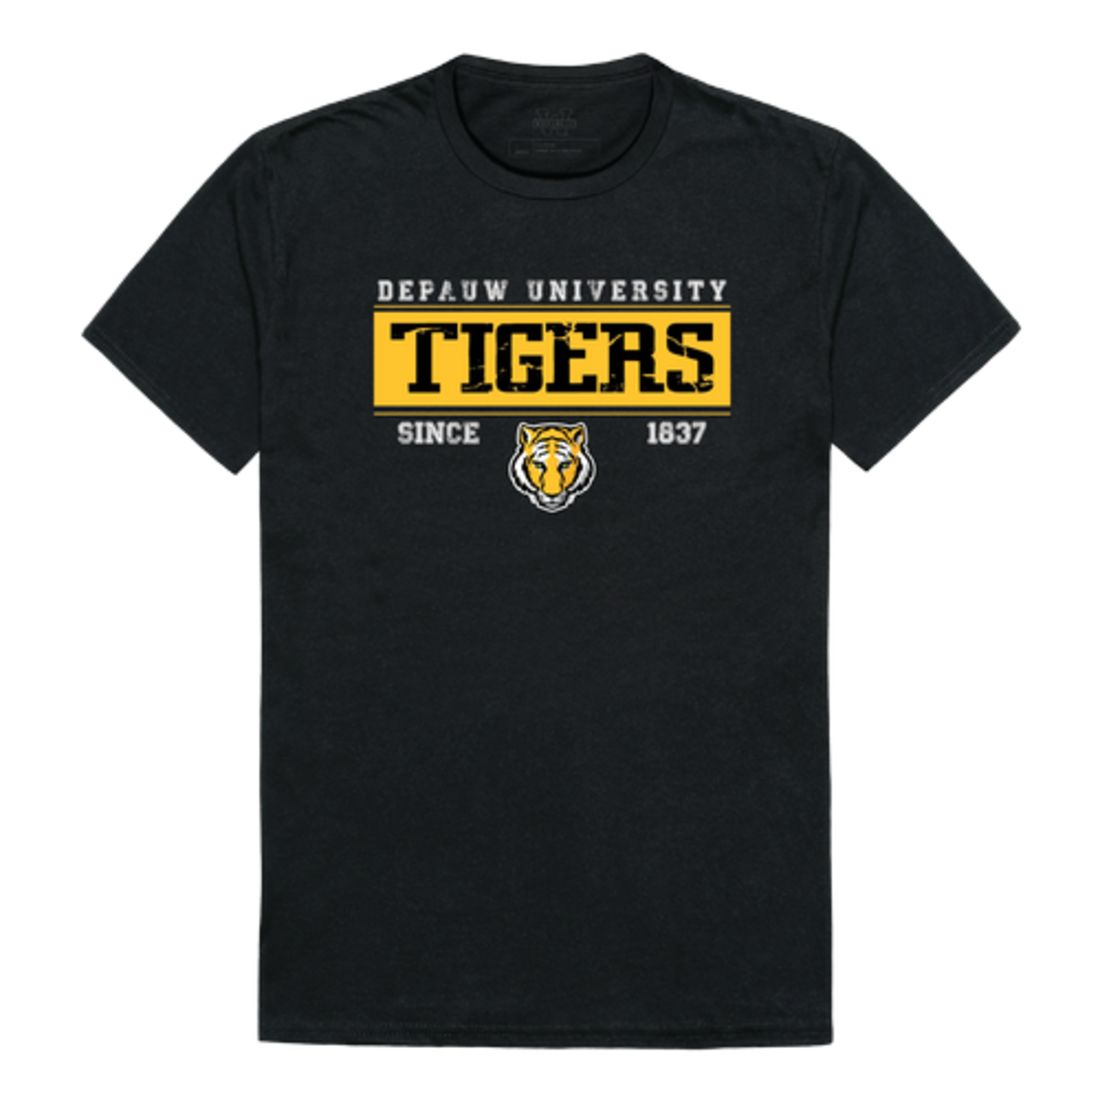 DePauw University Tigers Established T-Shirt Tee